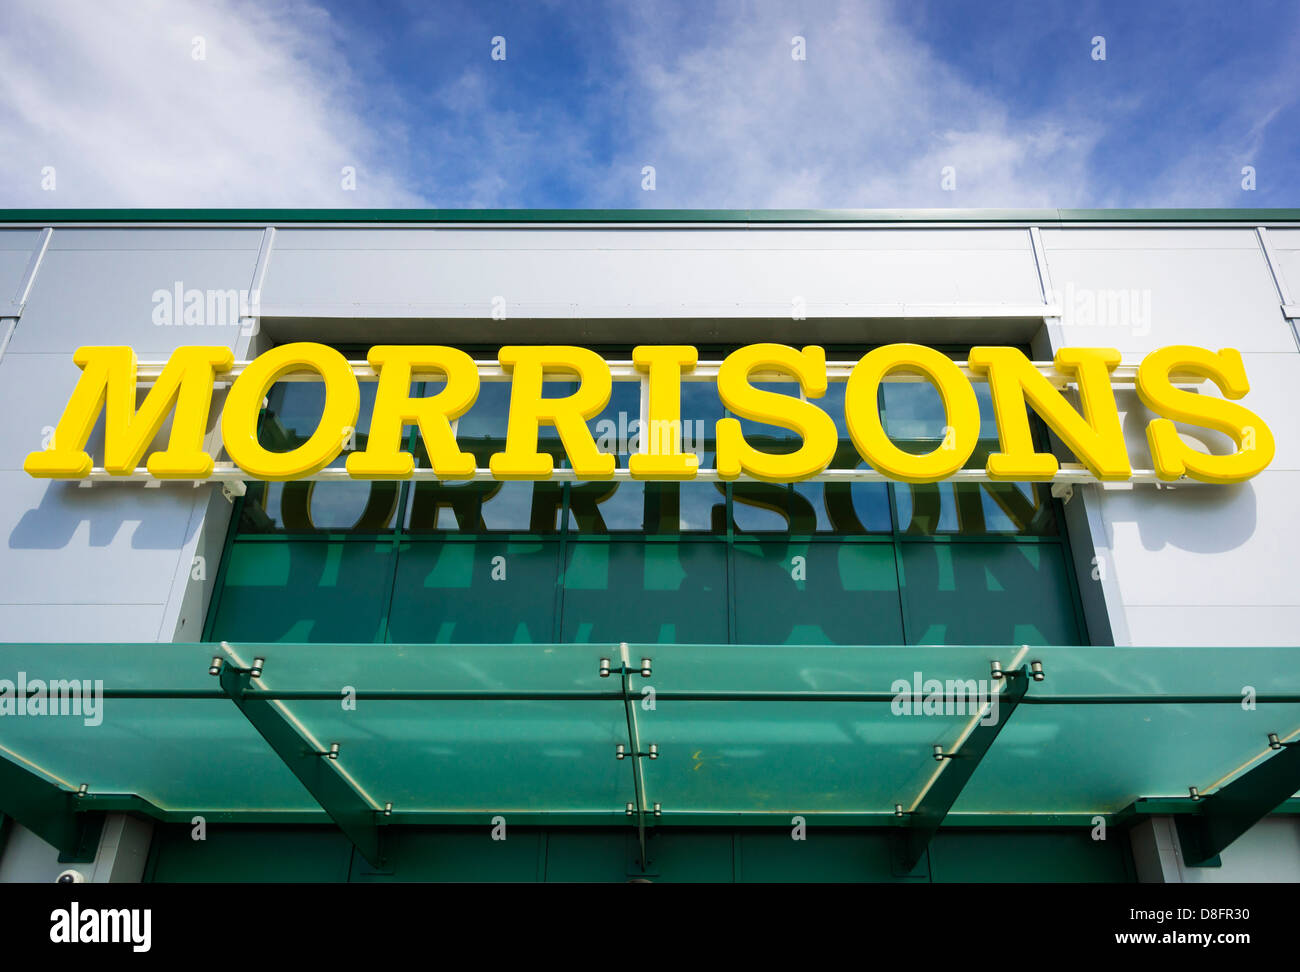 Morrisons supermarket sign / logo Stock Photo